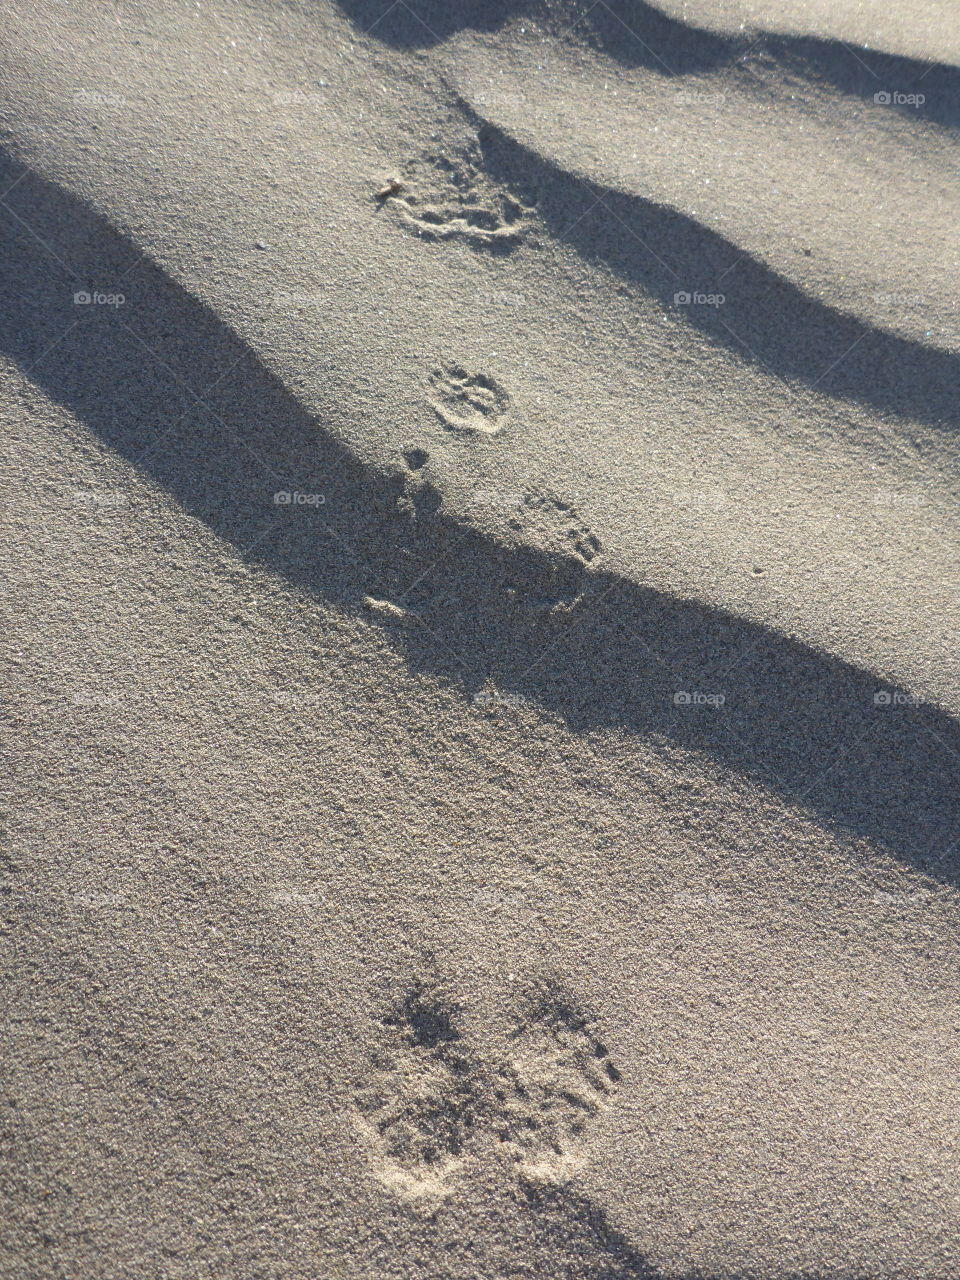 Animal track